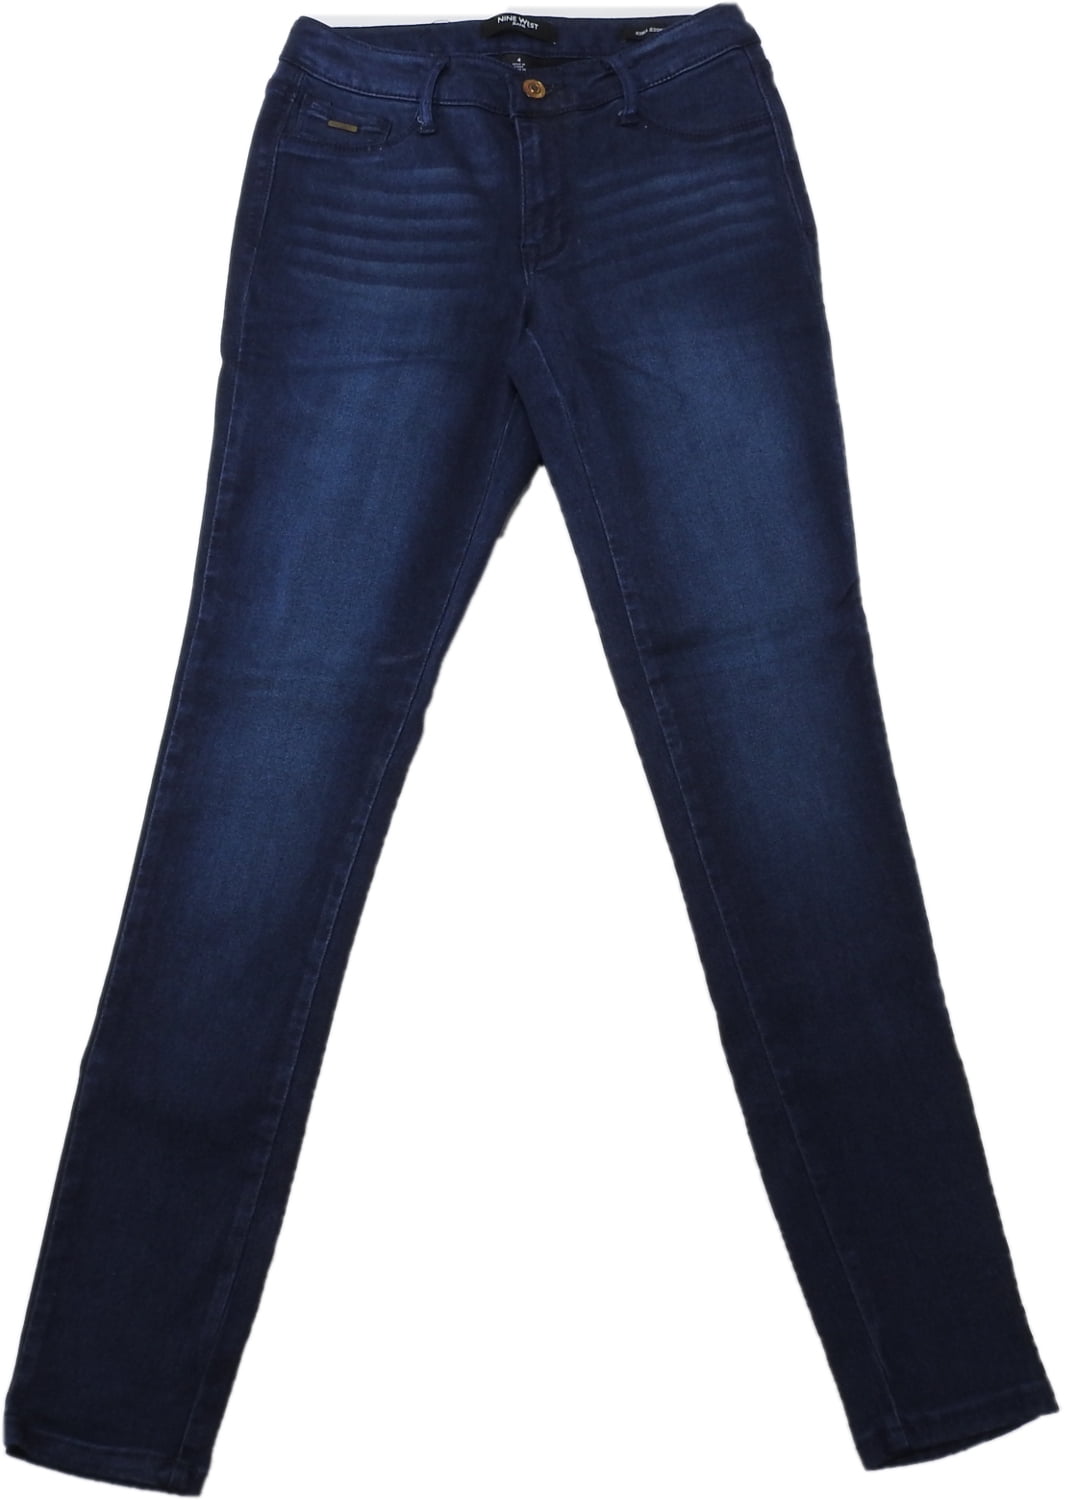 nine west jeans jessica jegging